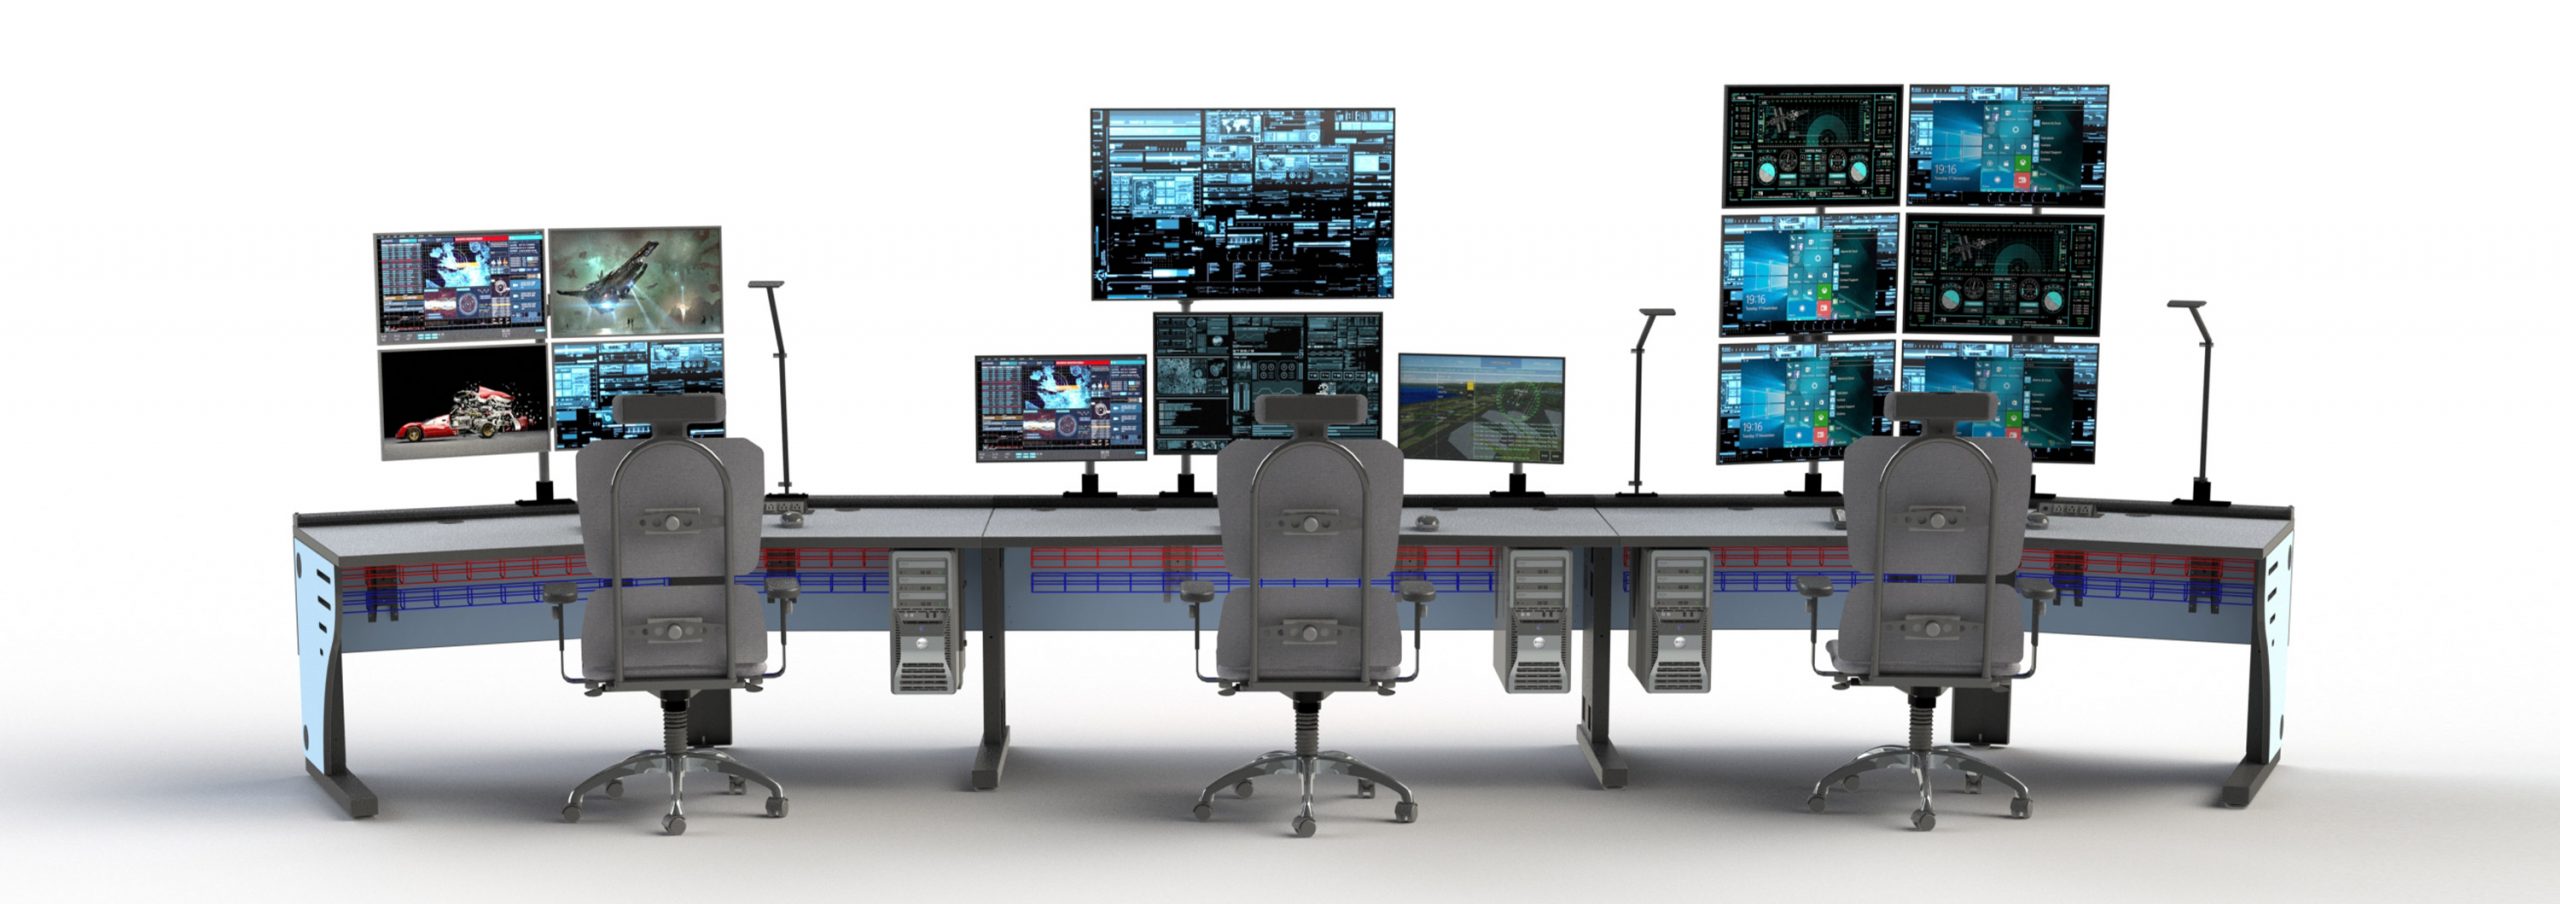 Control Room NOC Summit Edge rendering